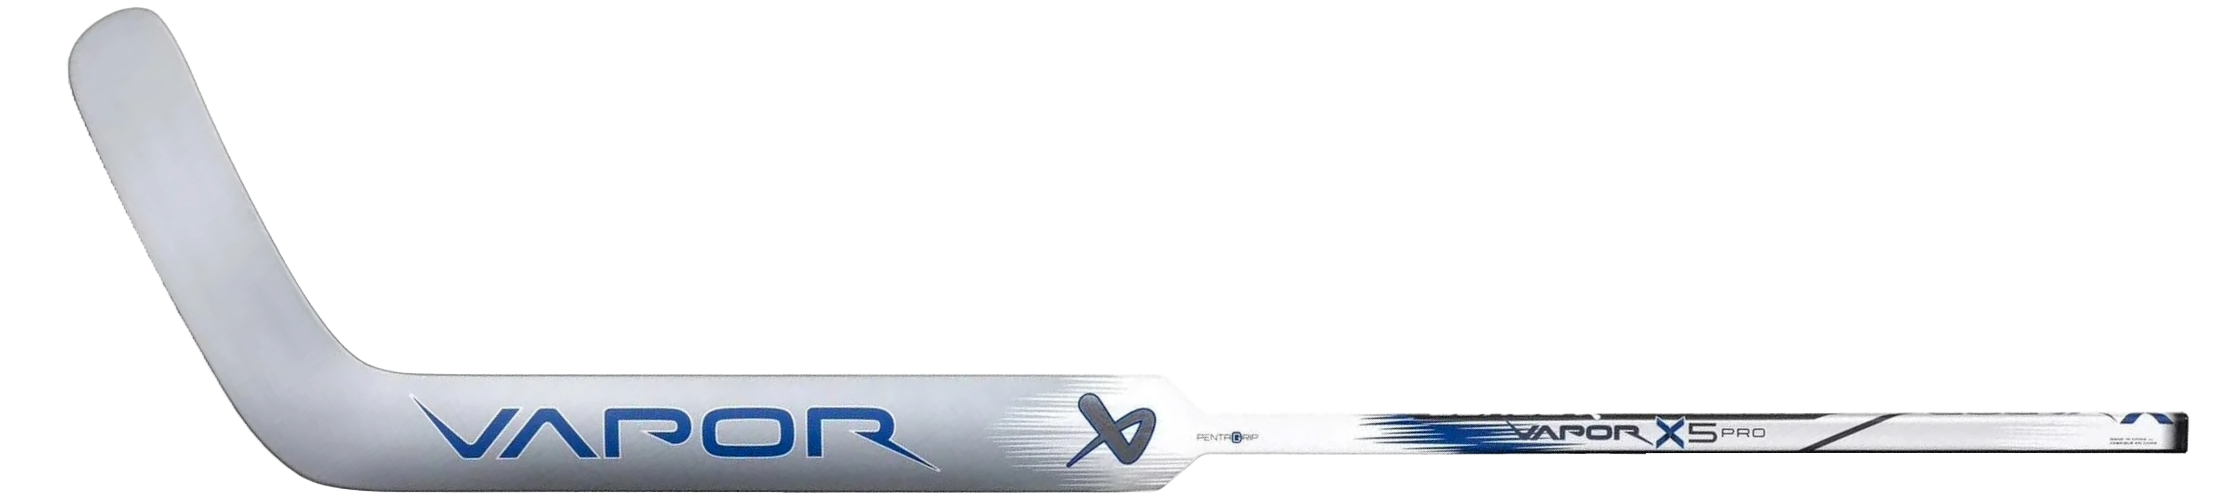 Bauer Vapor X5 Pro Intermediate Goalie Stick (Limited Edition)